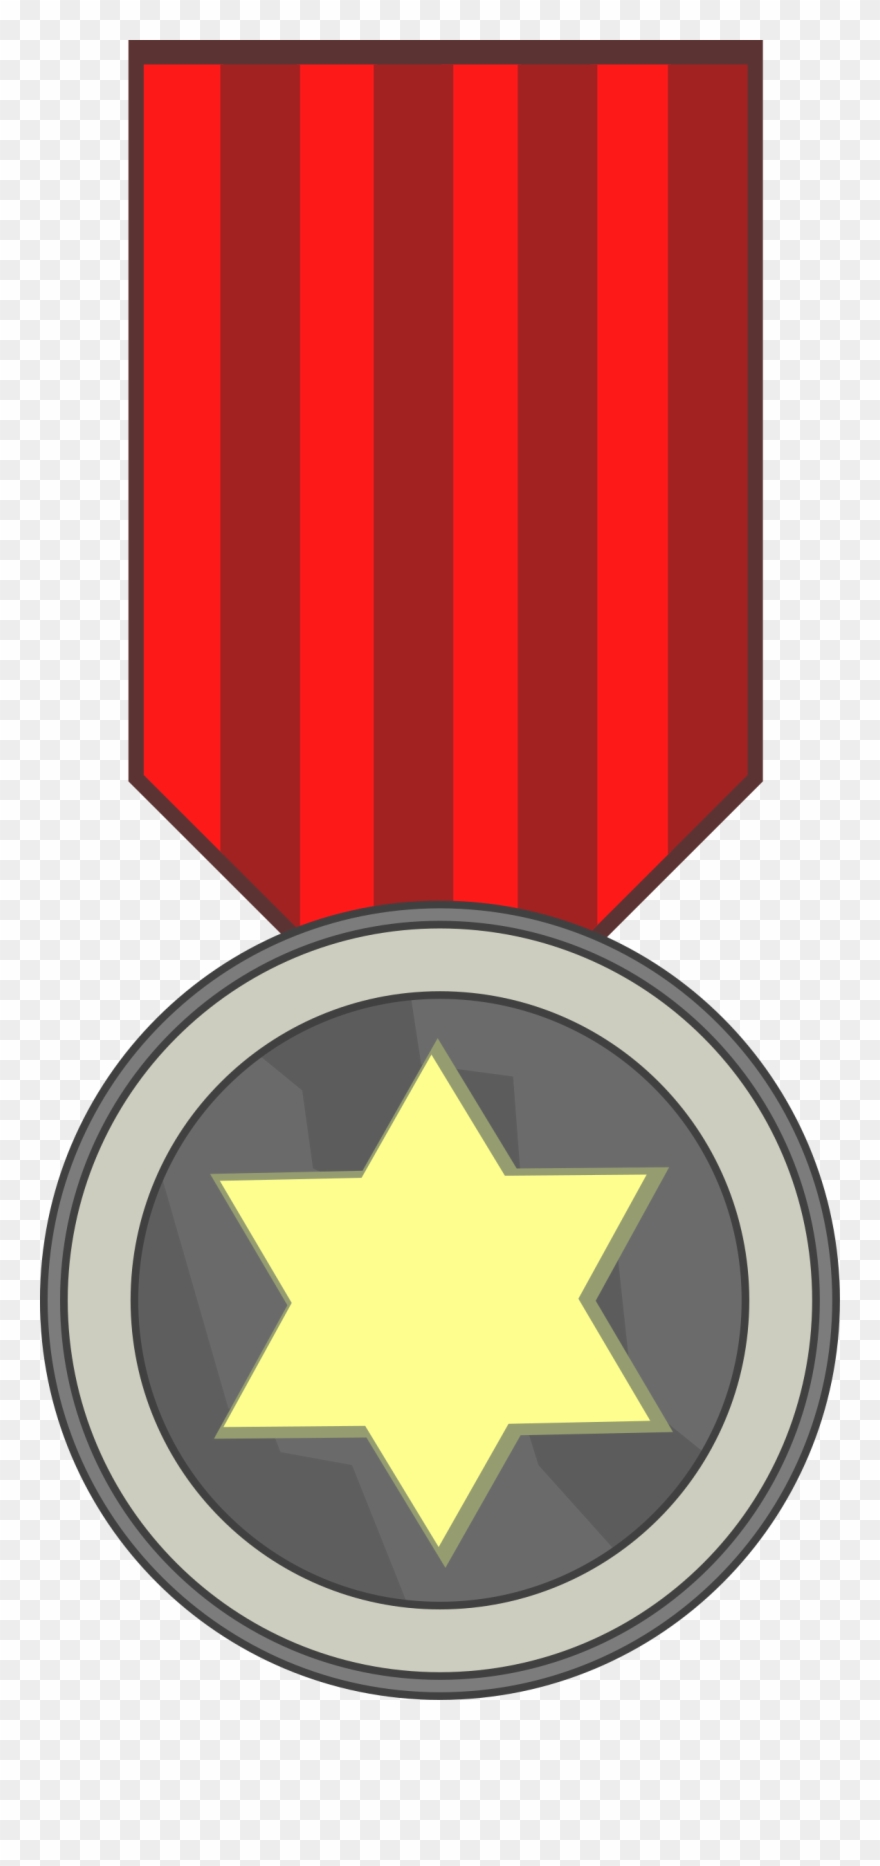 Price Sticker Free Star Award Medal